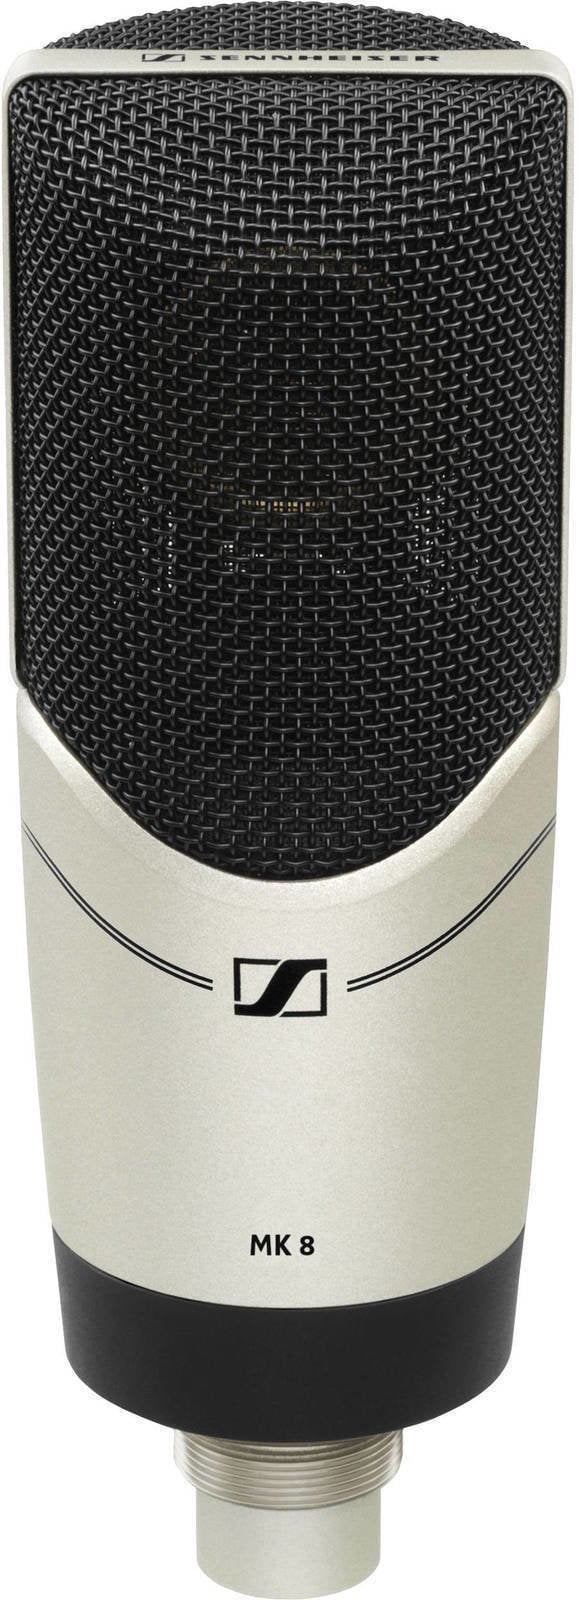 Студиен кондензаторен микрофон Sennheiser MK 8 Студиен кондензаторен микрофон